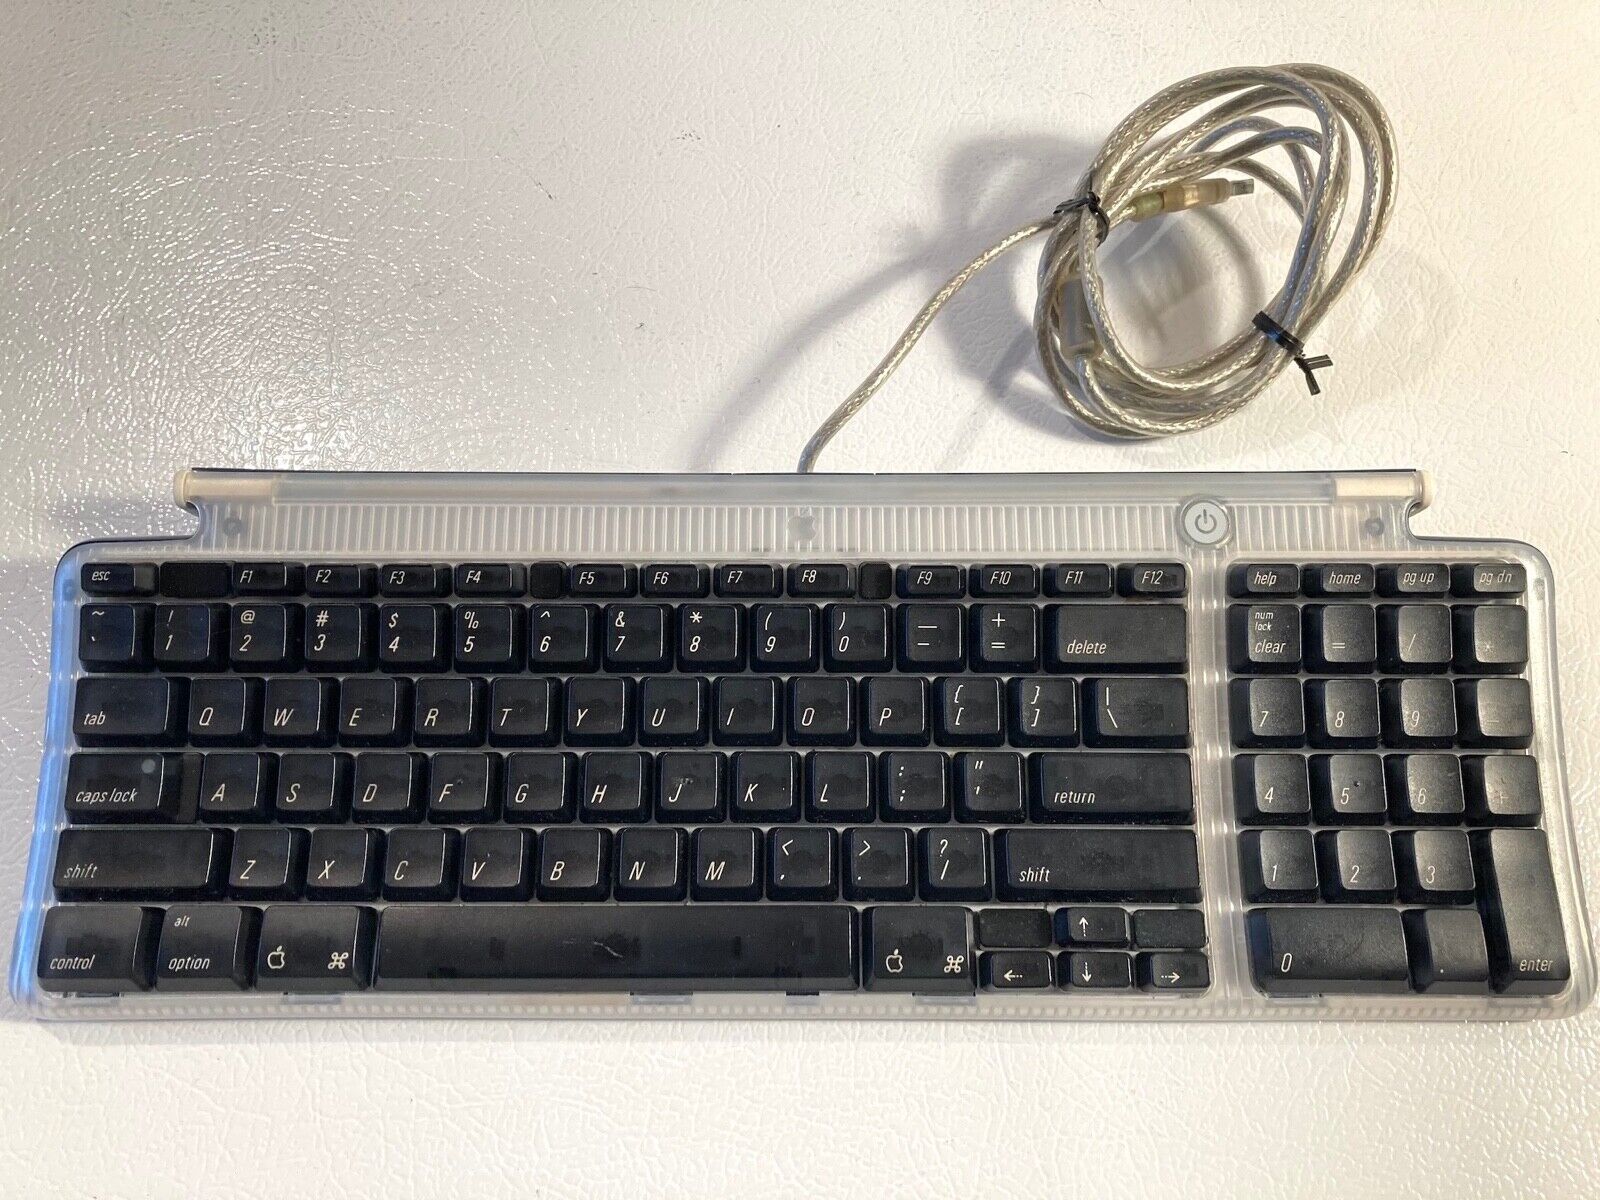 Vintage Apple M2452 Graphite USB Keyboard - 1999